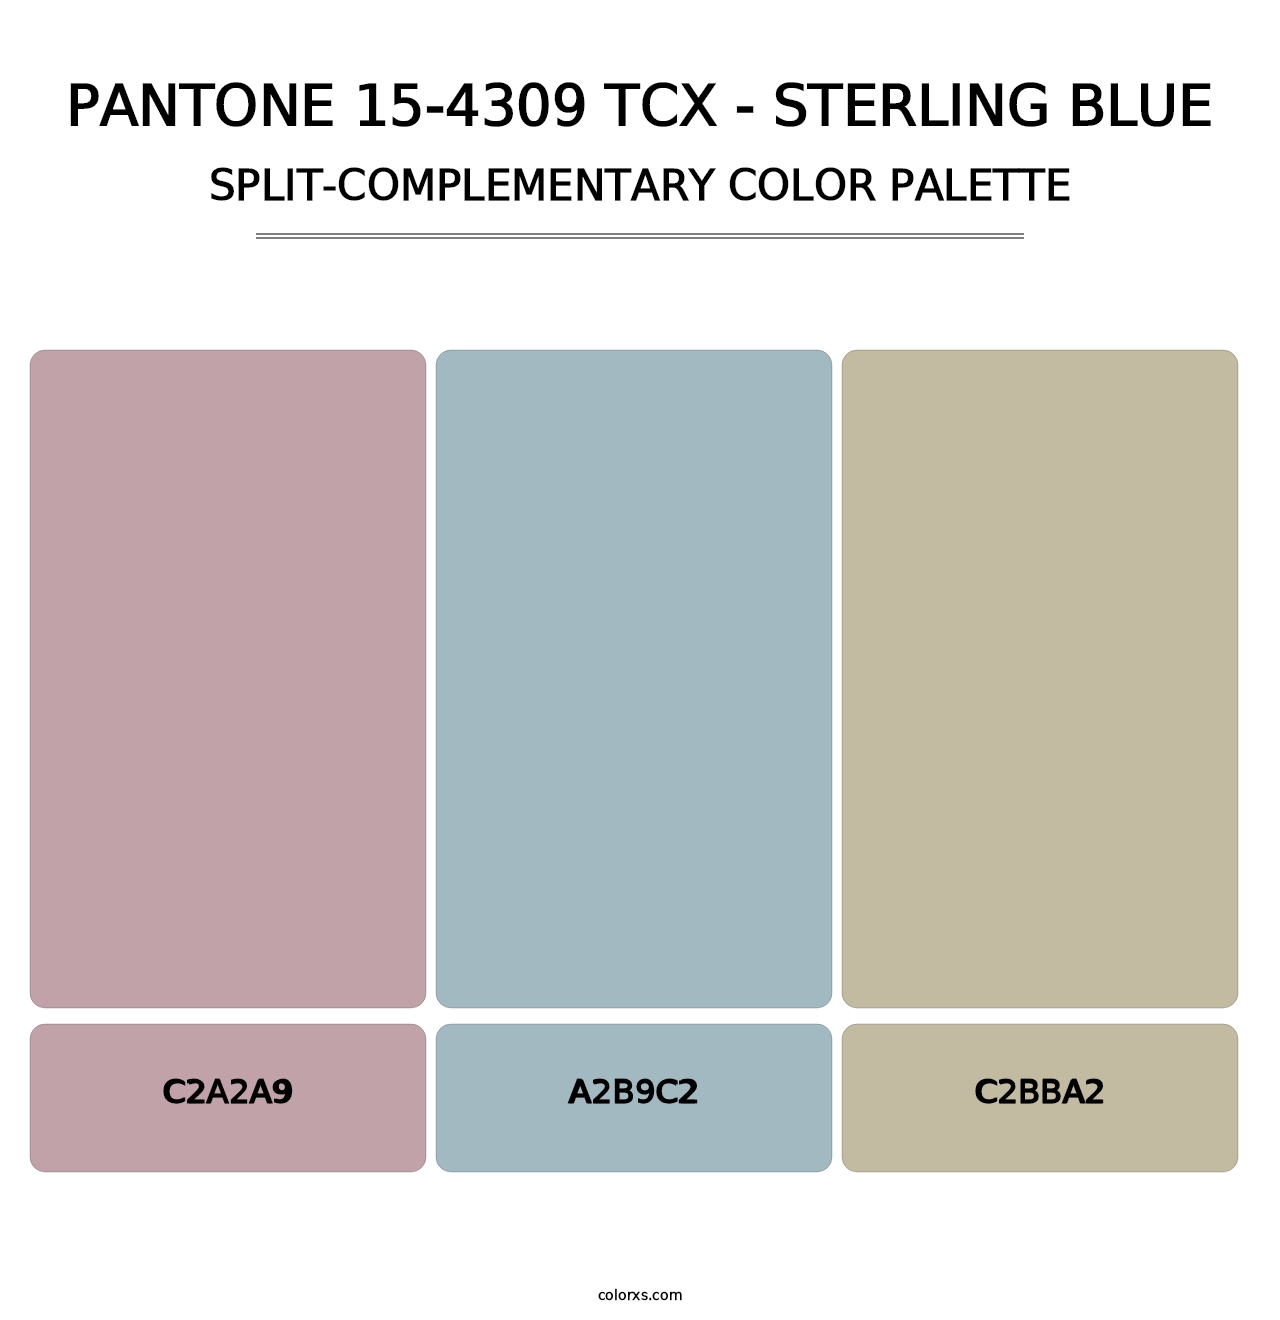 PANTONE 15-4309 TCX - Sterling Blue - Split-Complementary Color Palette